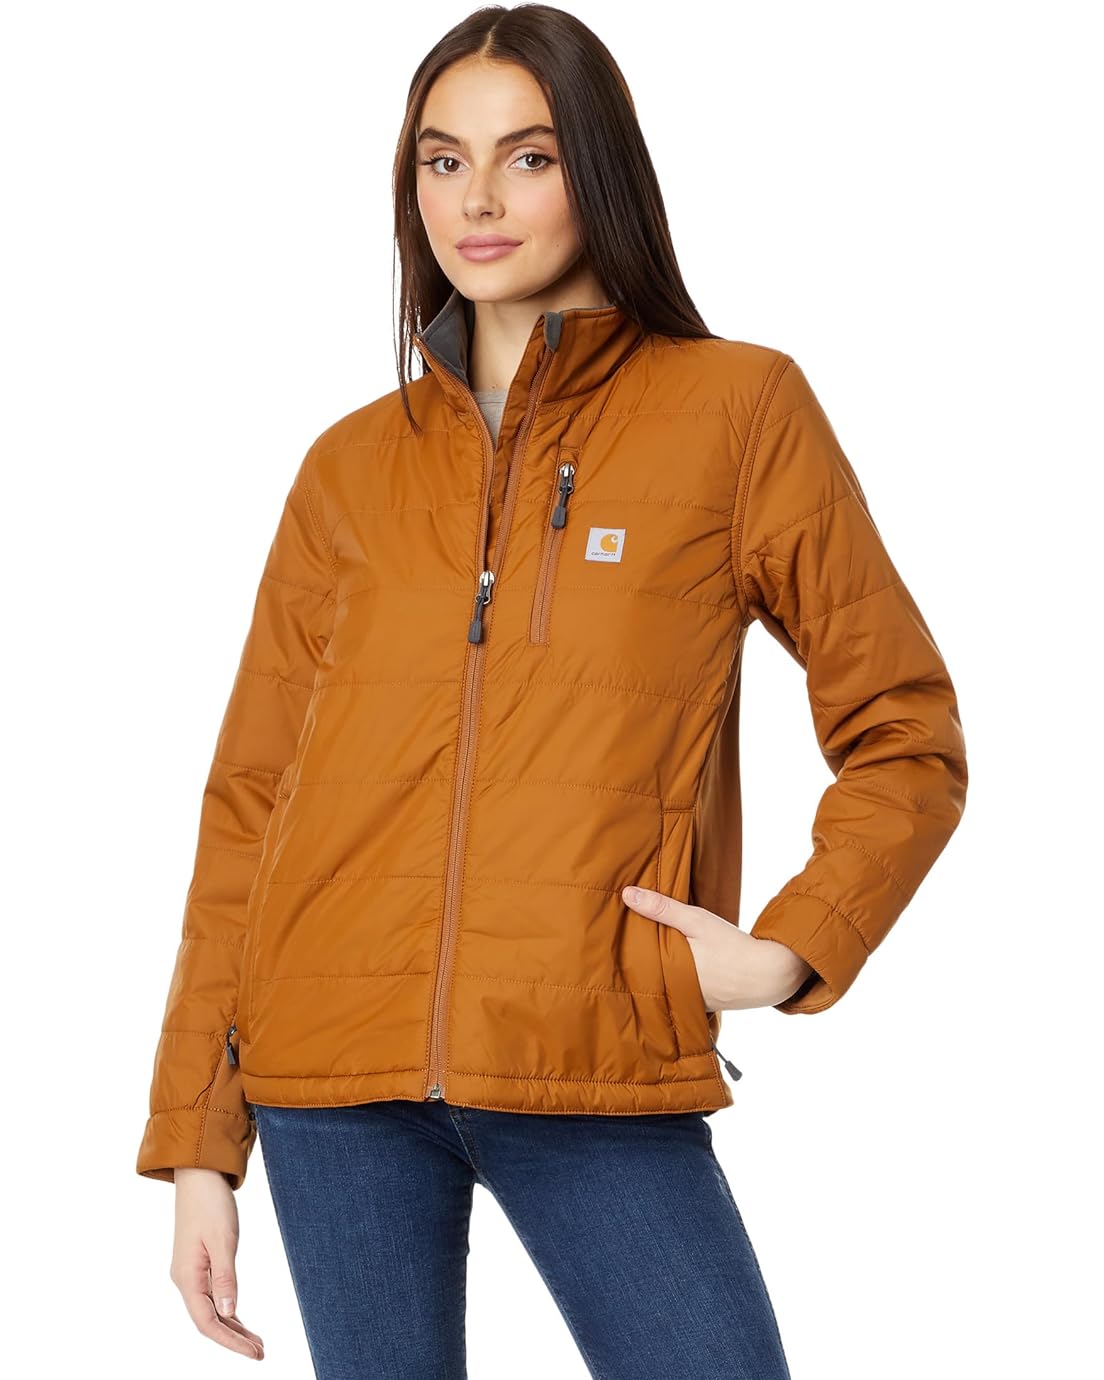 Carhartt Rain Defender Relaxed Fit Lightweight Insulated Jacket